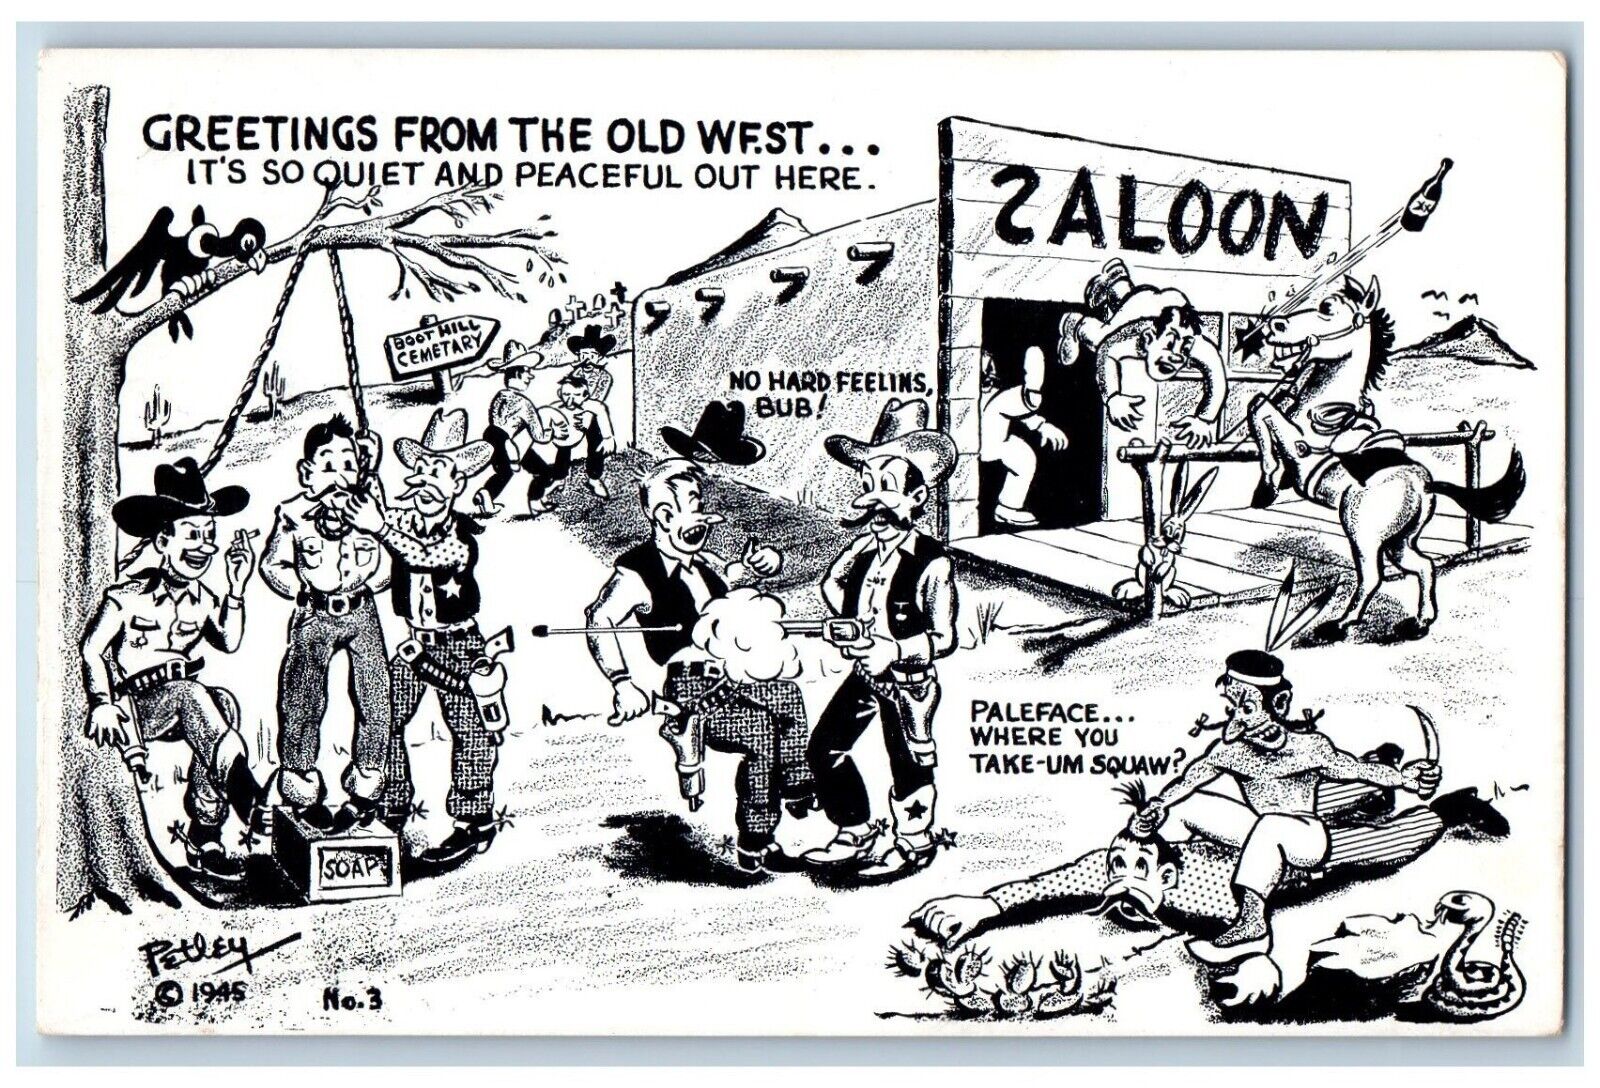 Holbrook Arizona AZ Postcard Greetings From The Old West Saloon Petley 1949